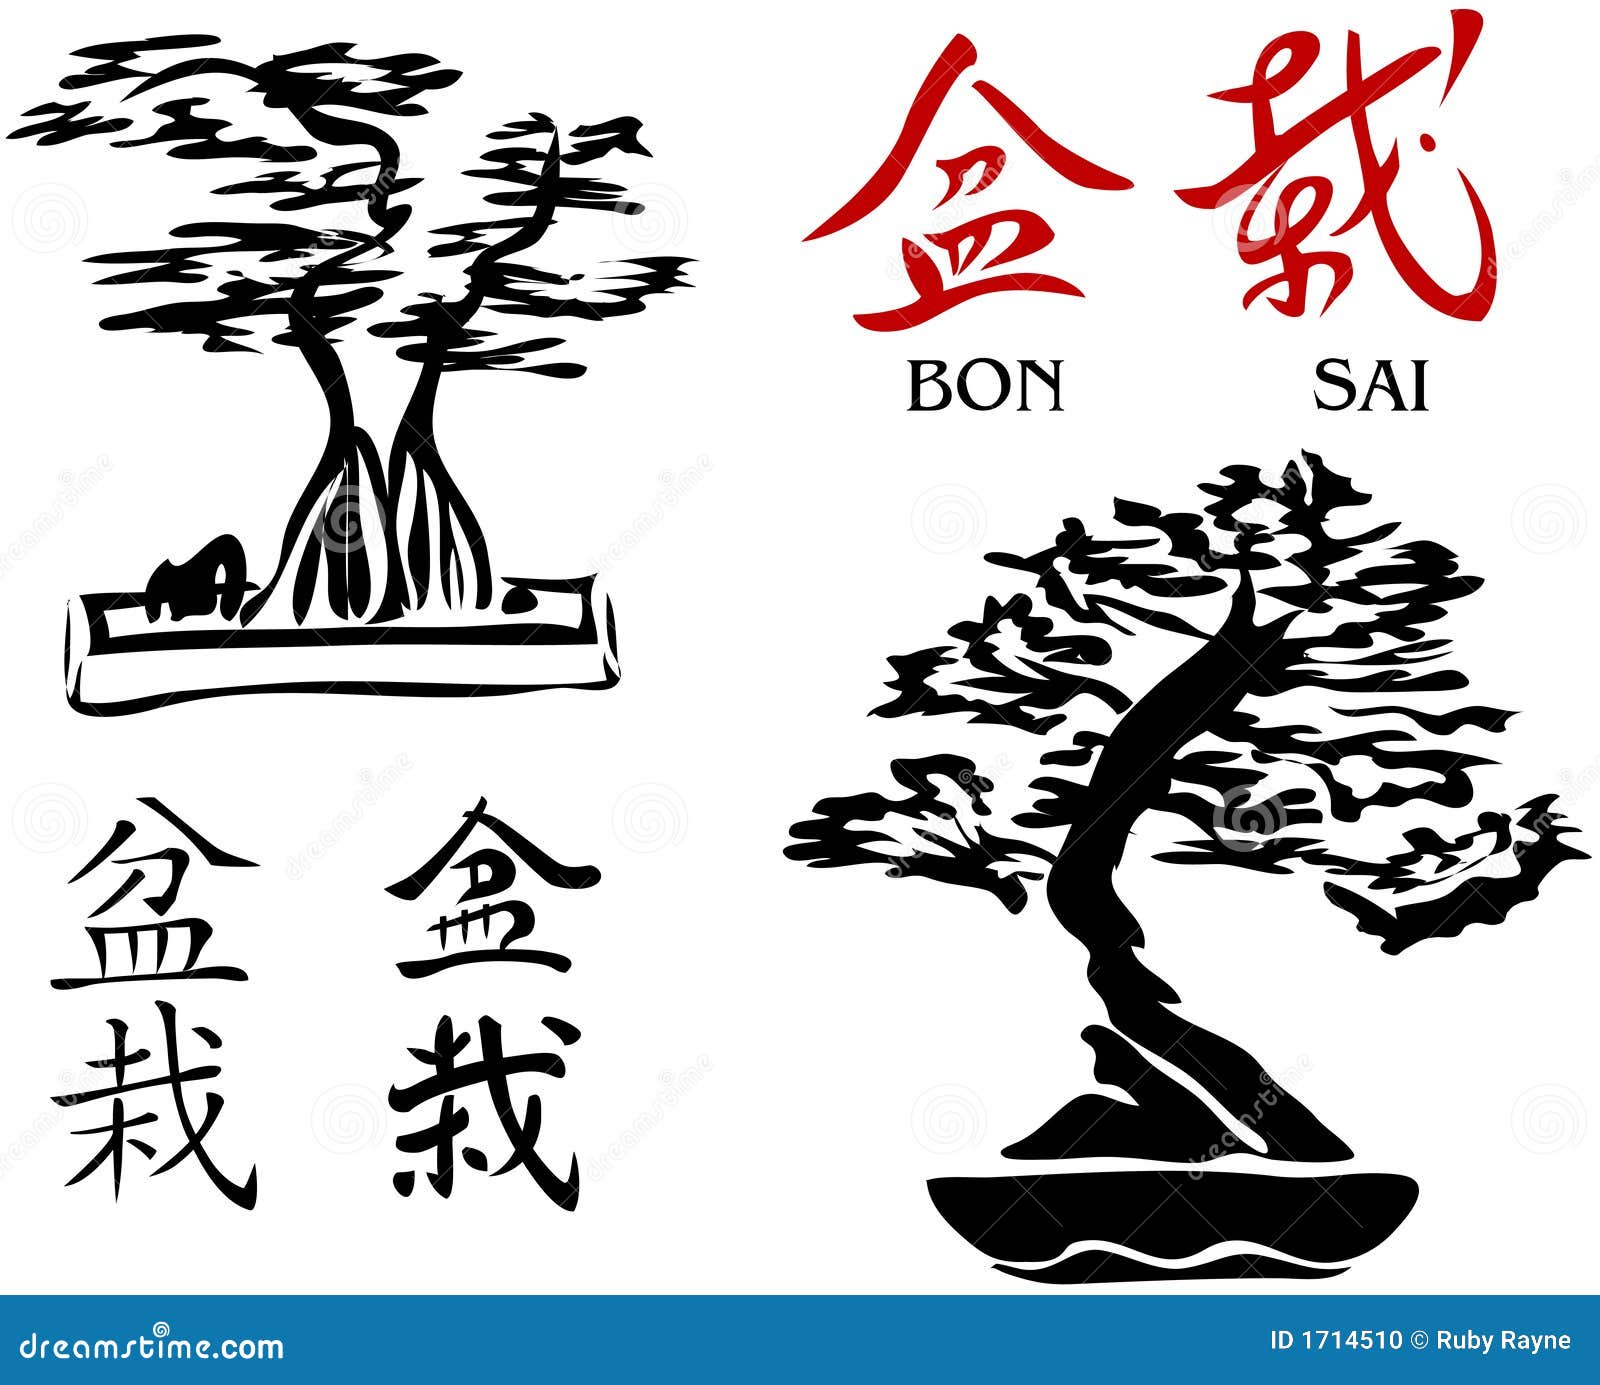 bonsai trees & kanji characters 2 []